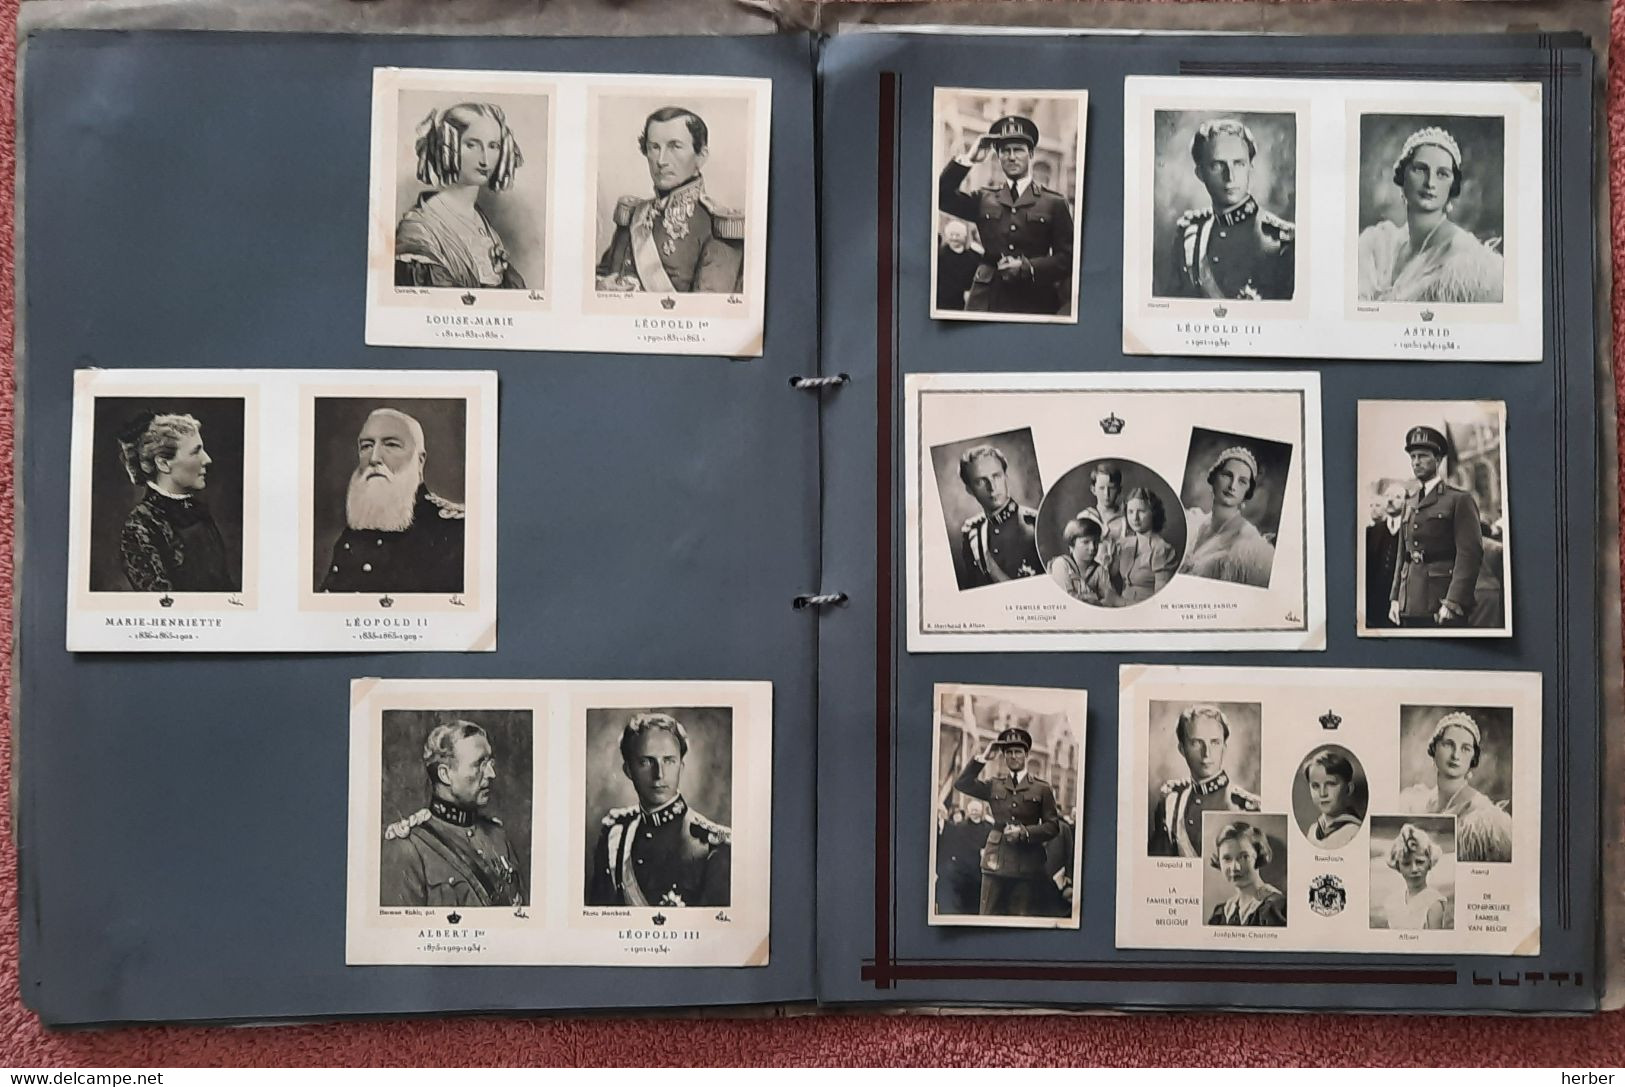 ALBUM LUTTI - Lot Chromo's en Ansichtkaarten (54x) Famille royale de Belgique - Foto's (3x) Léopold III - Ons Volk (1x)